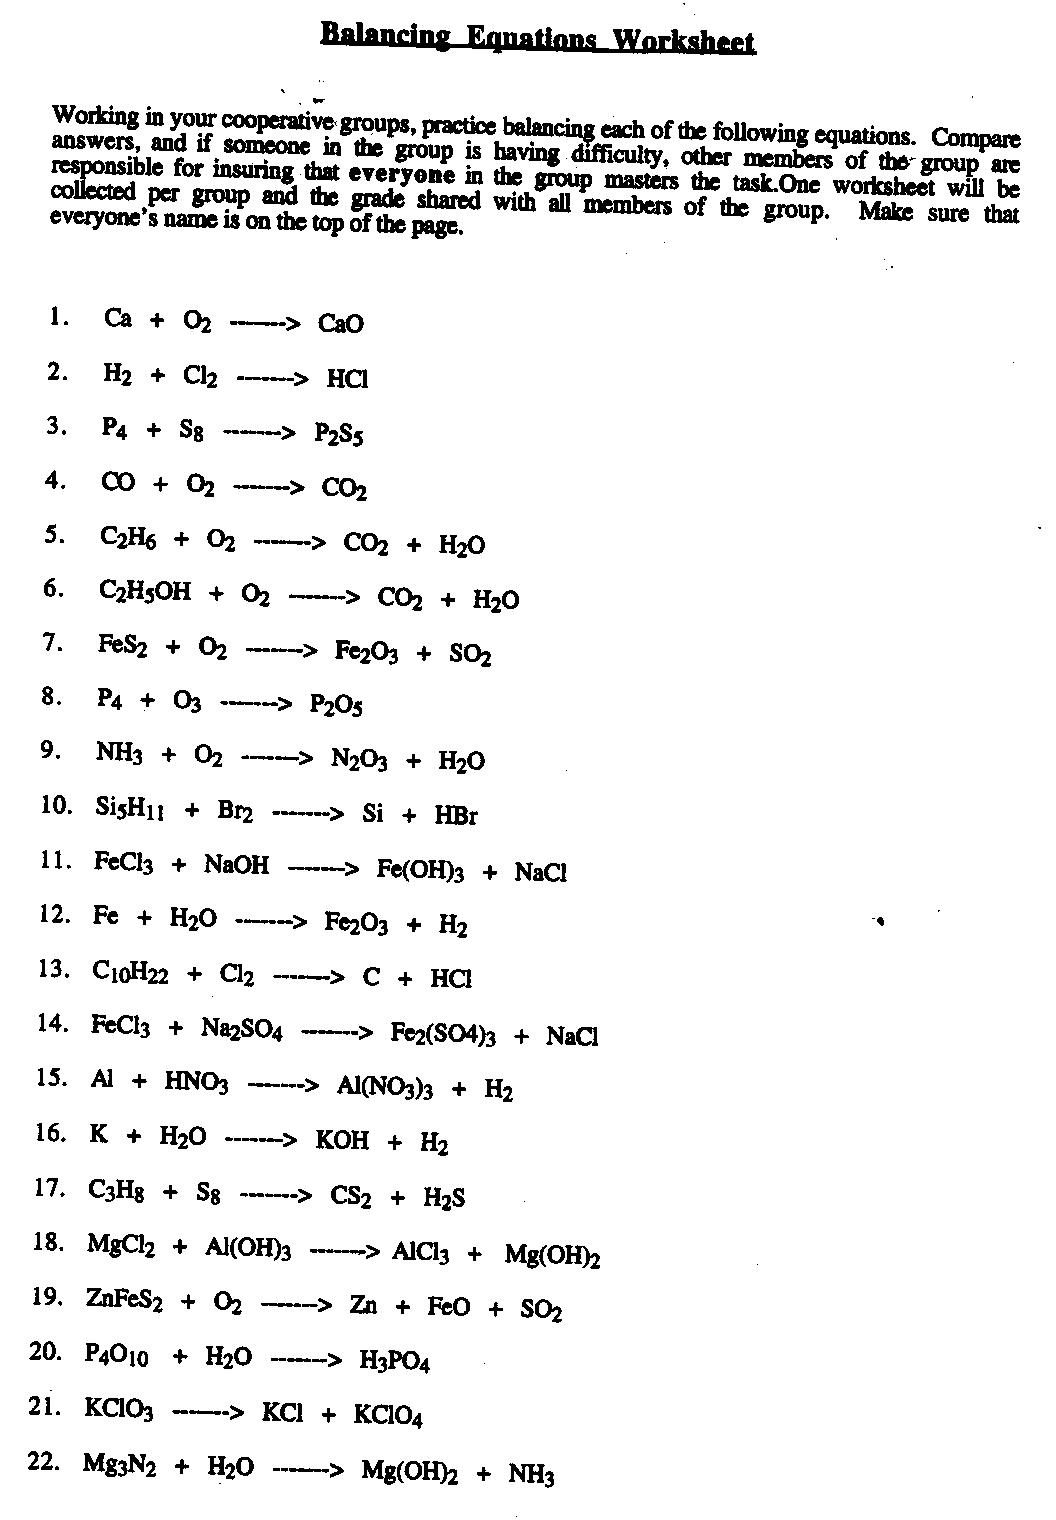 Balancing Chemical Equations Worksheet Answer Key Image